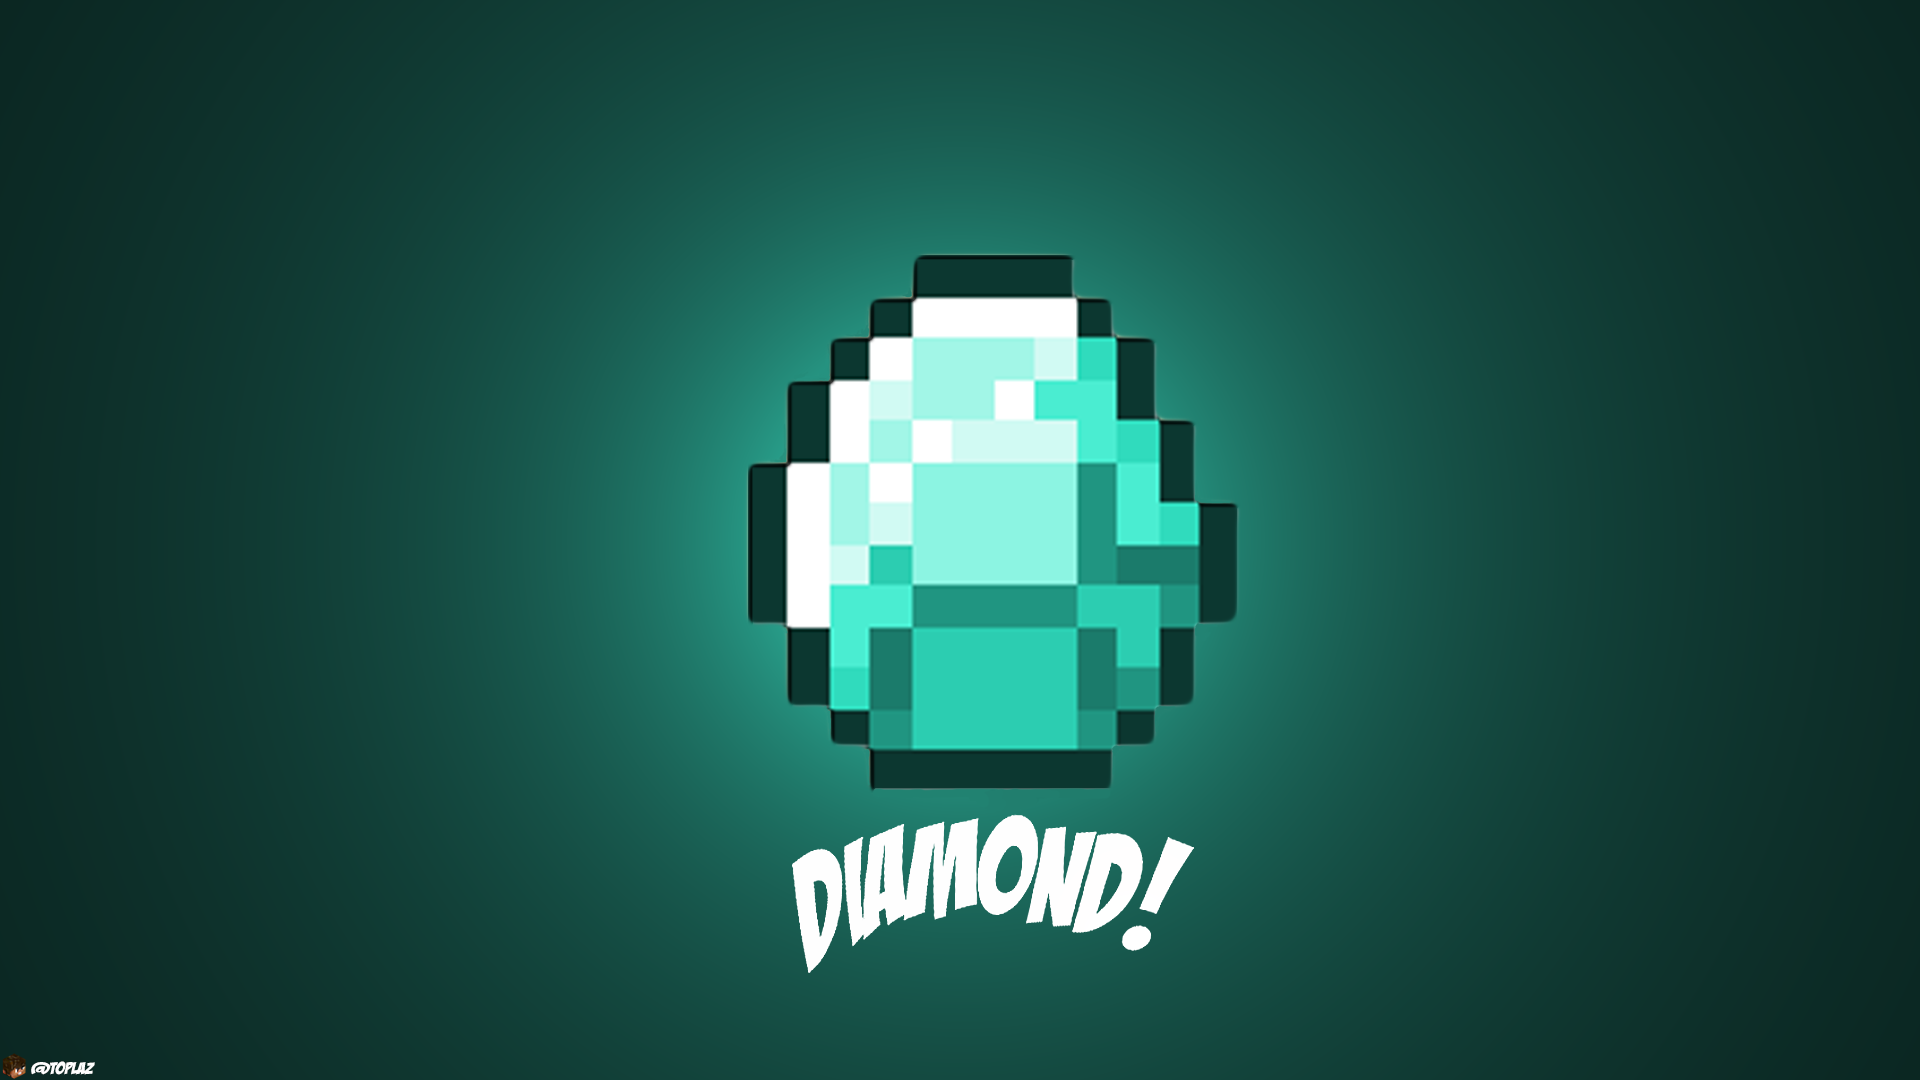 minecraft diamond images background hd wallpaper minecraft diamond